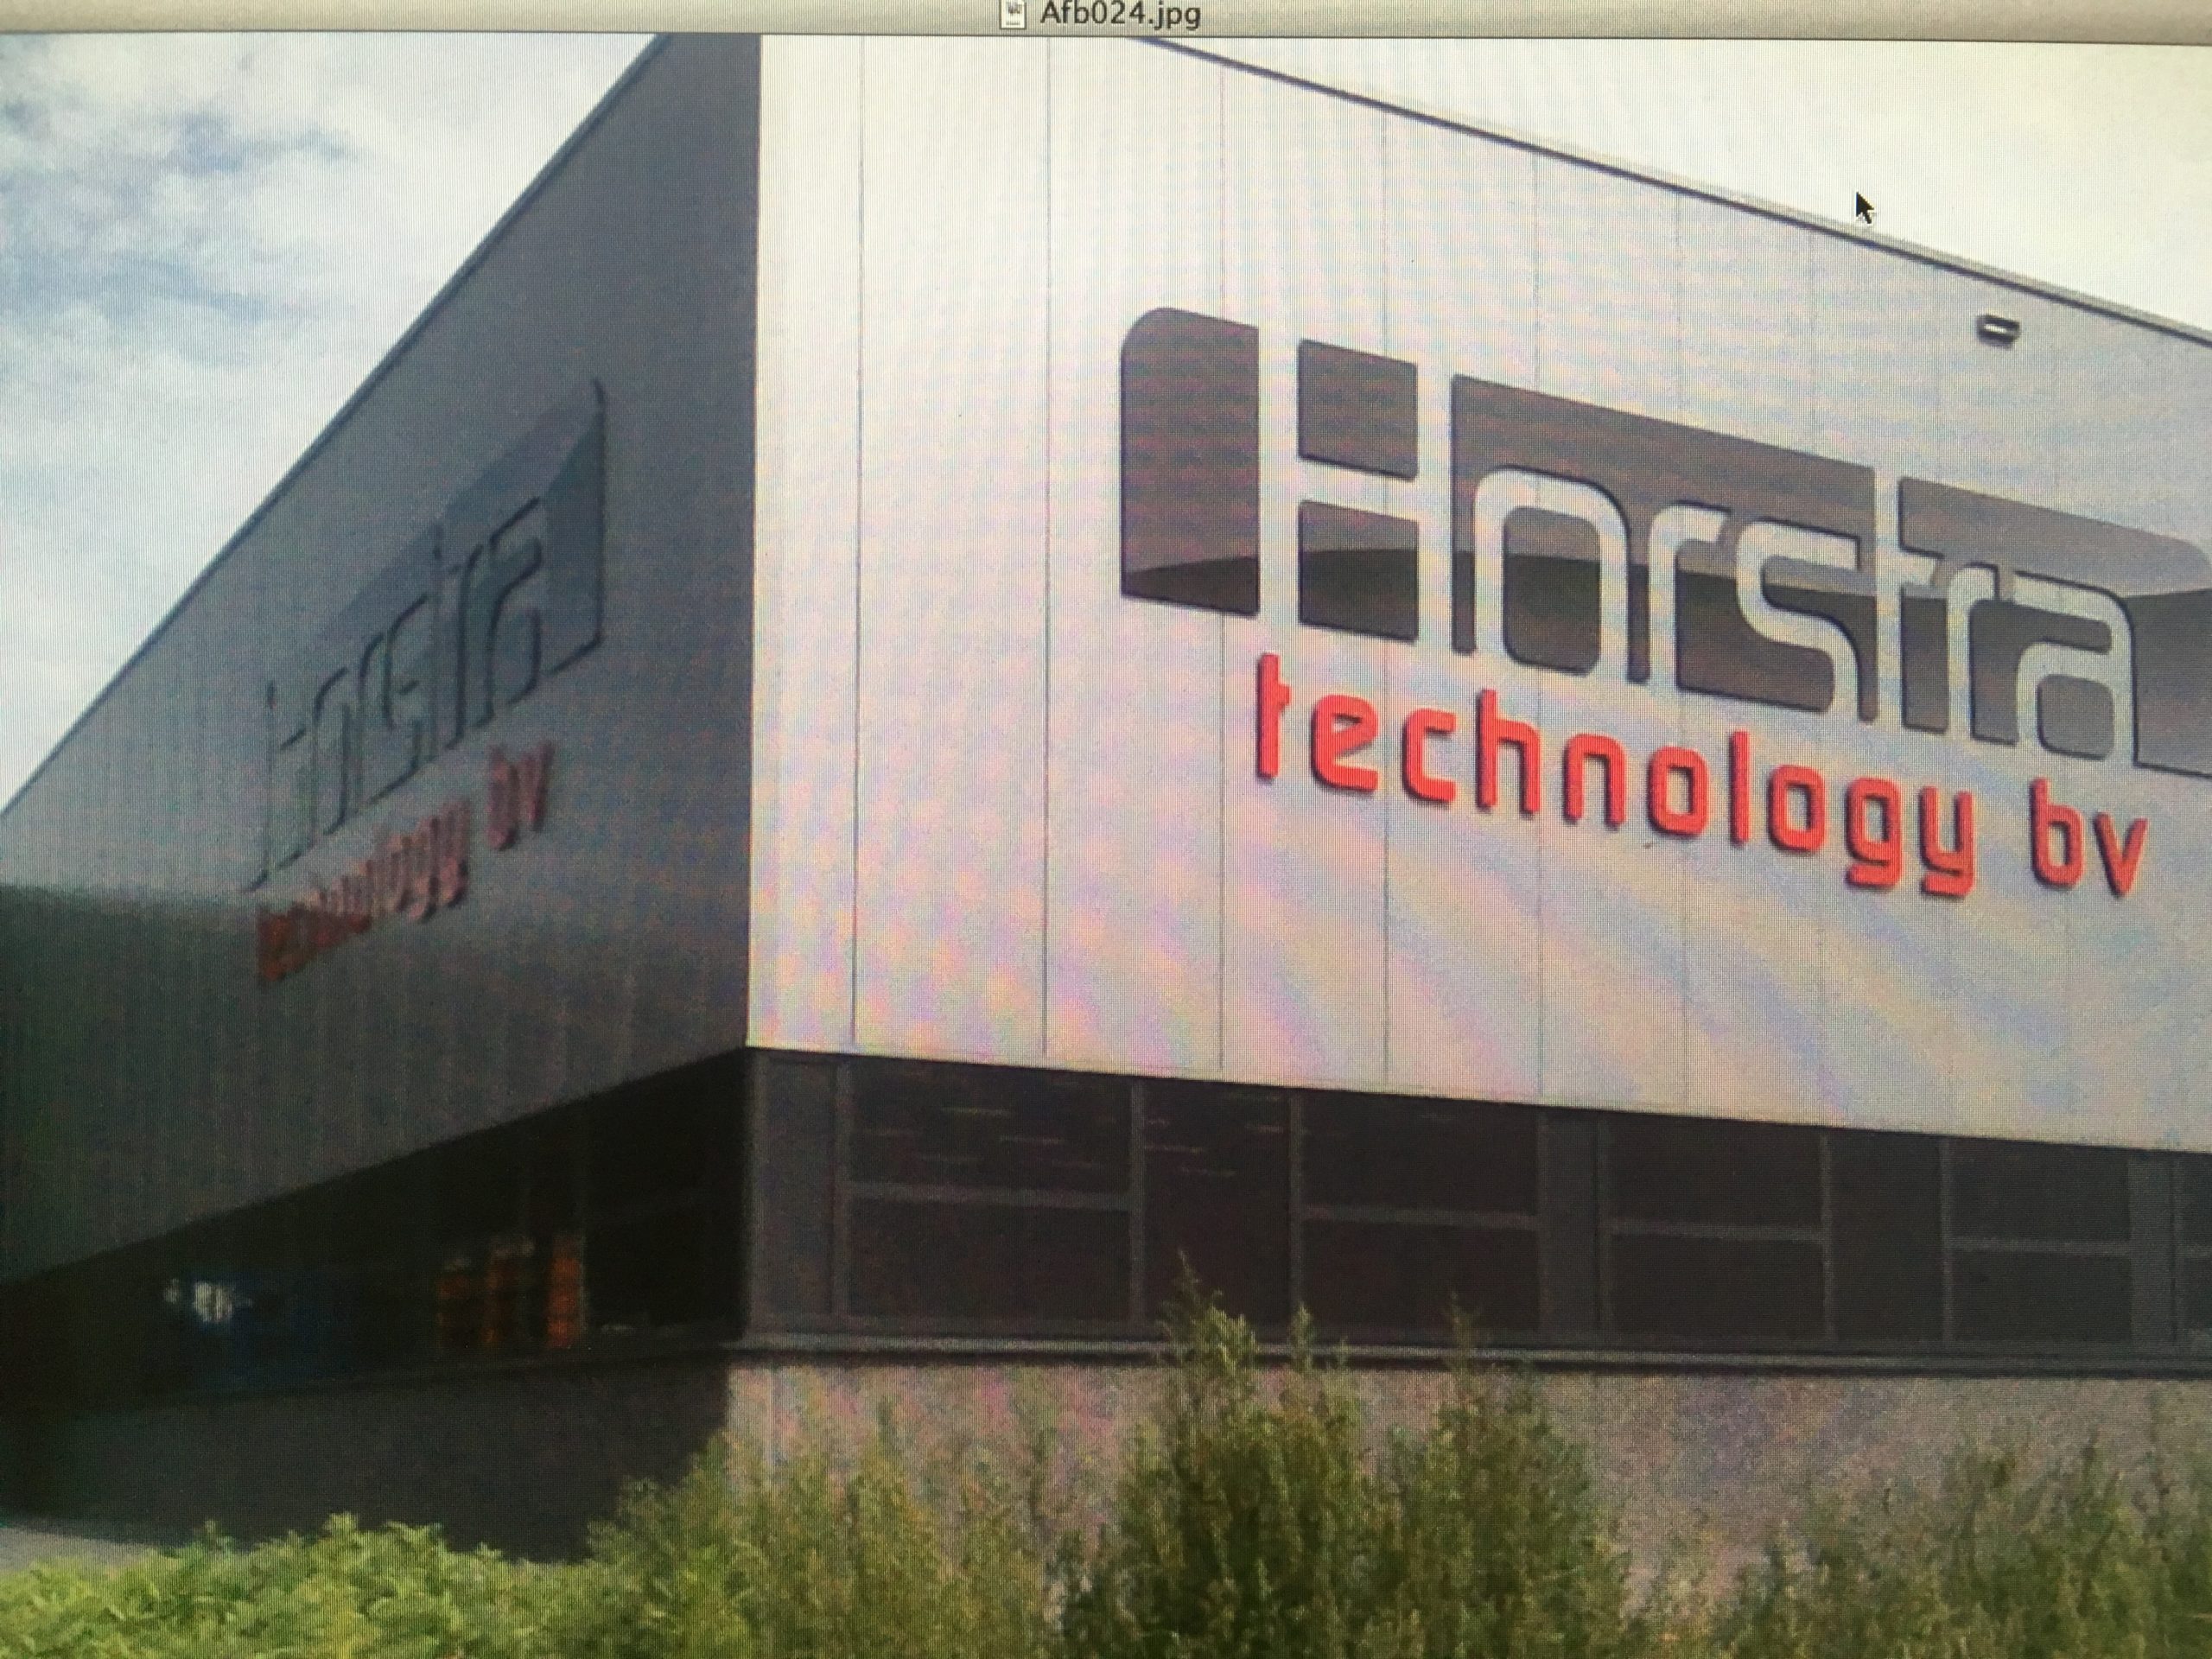 Horstra technology gevelreclame